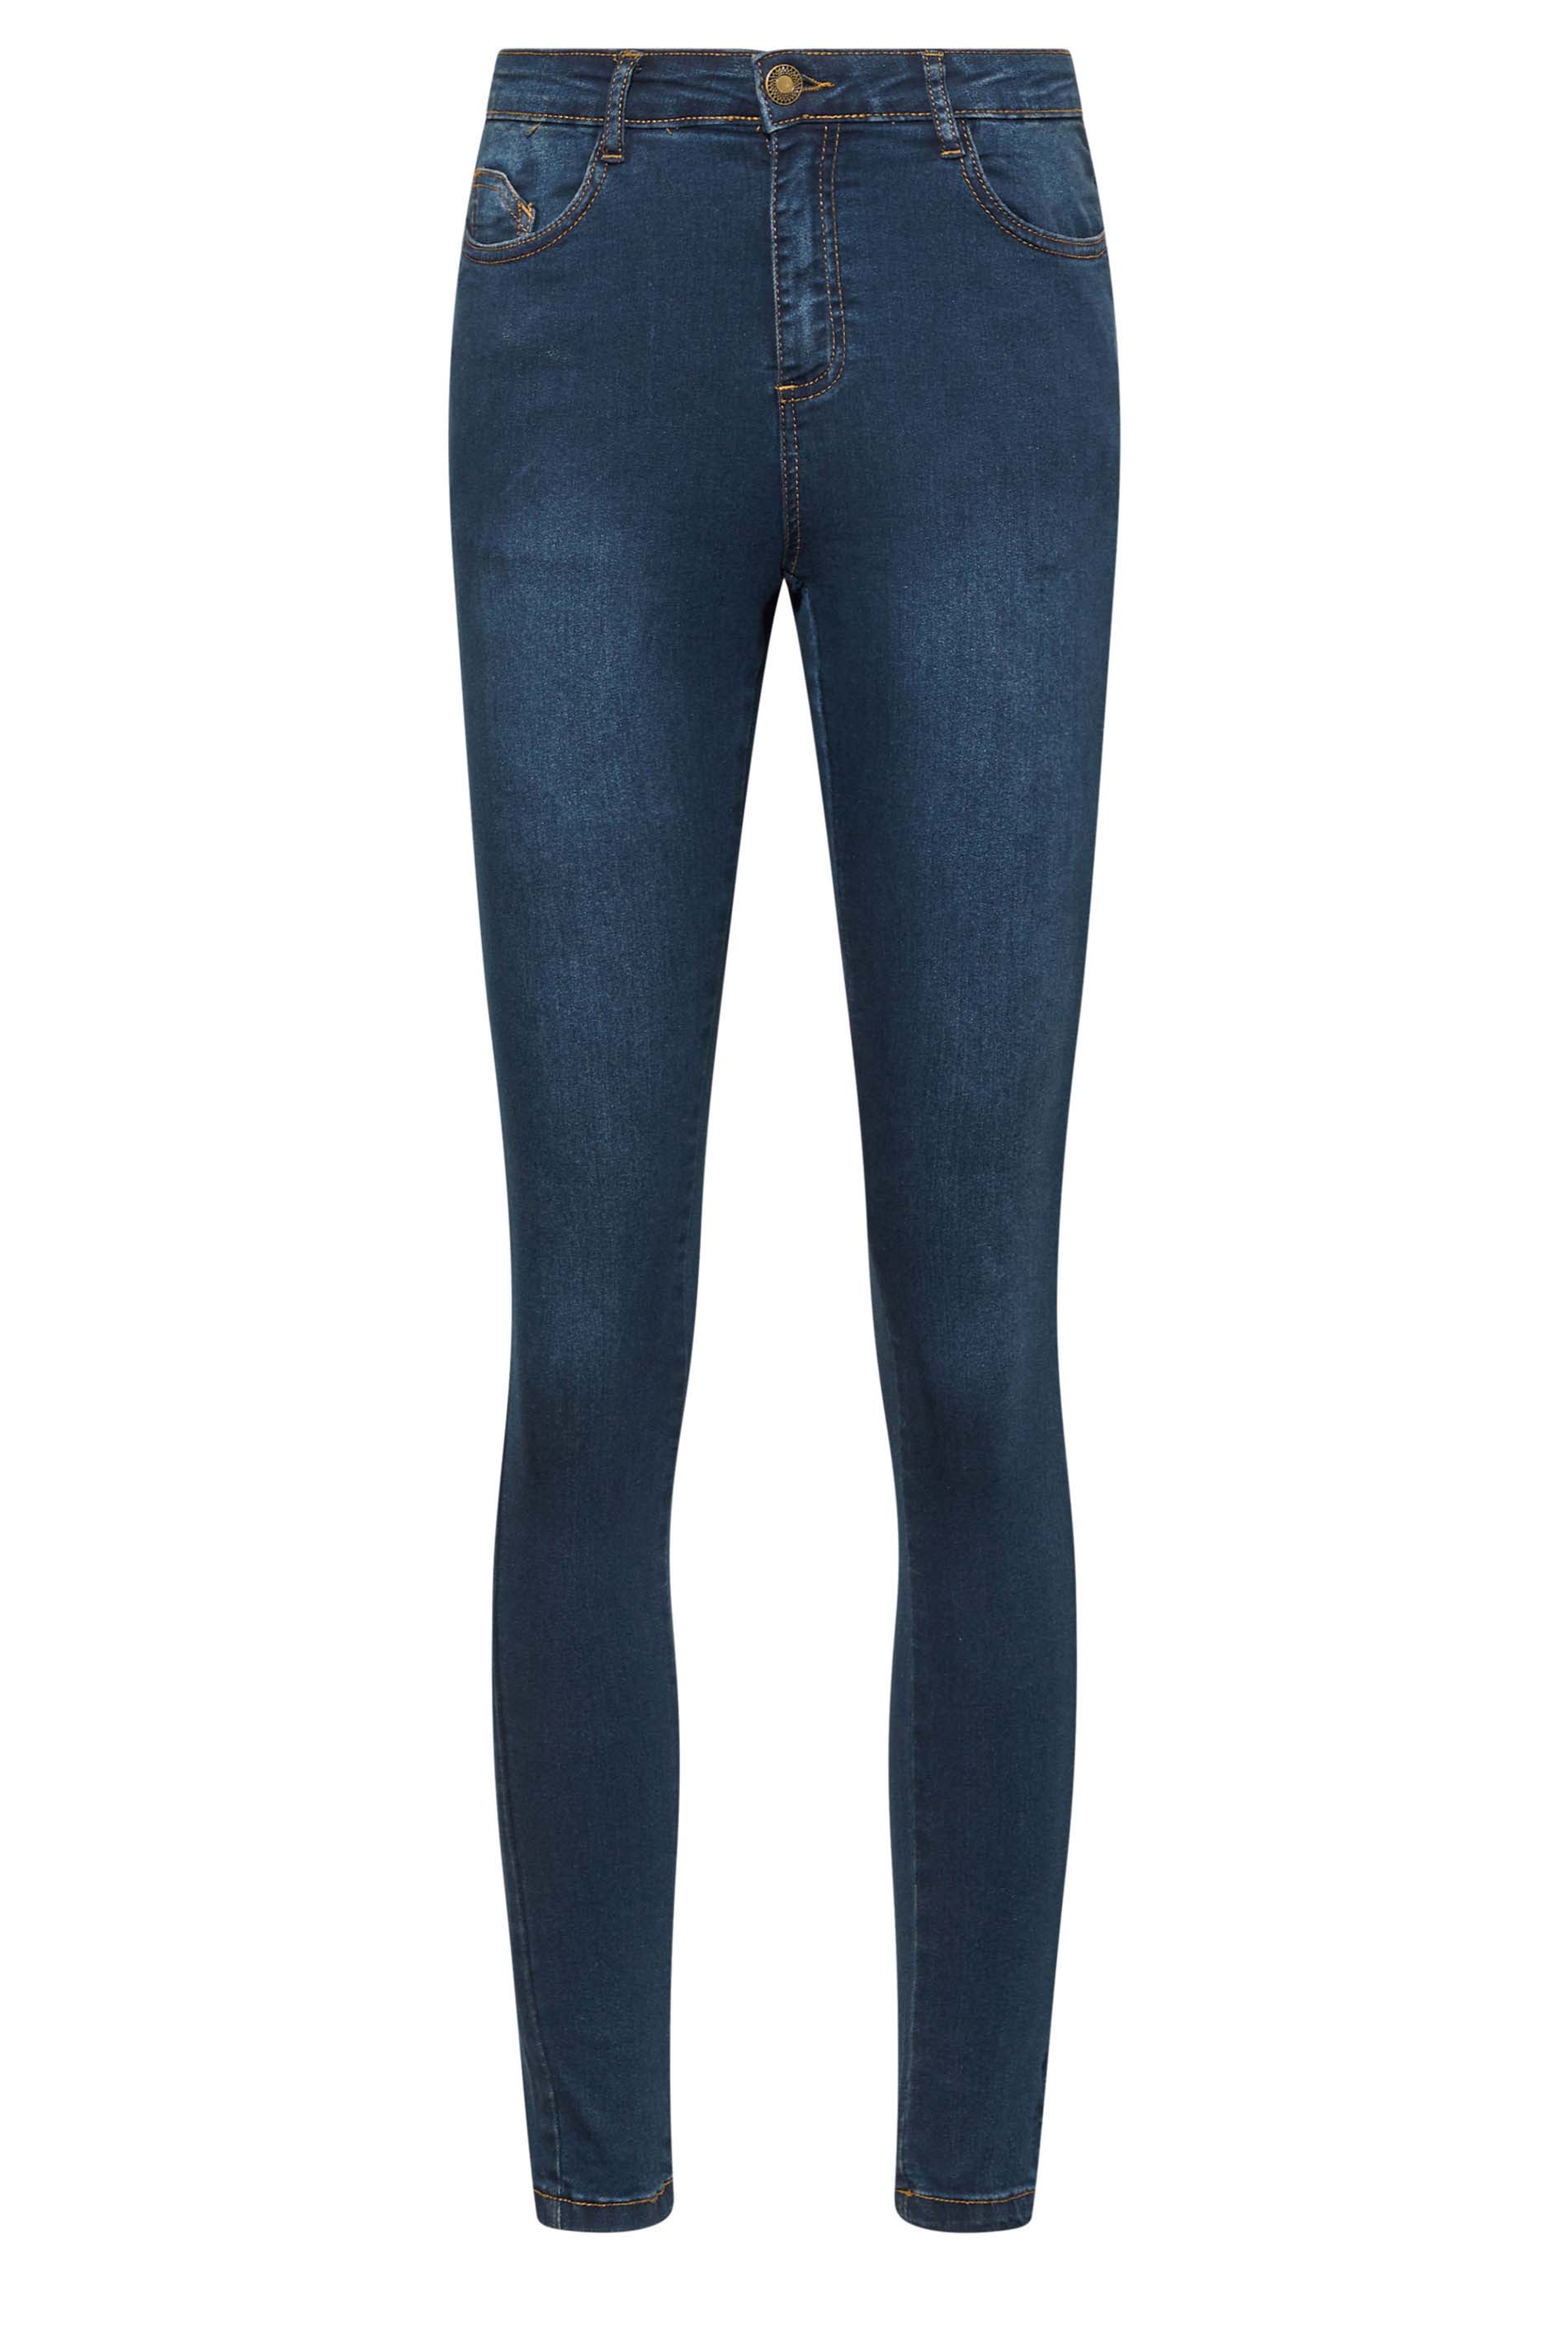 LTS Tall Women's Indigo Blue Skinny Stretch AVA Jeans | Long Tall Sally